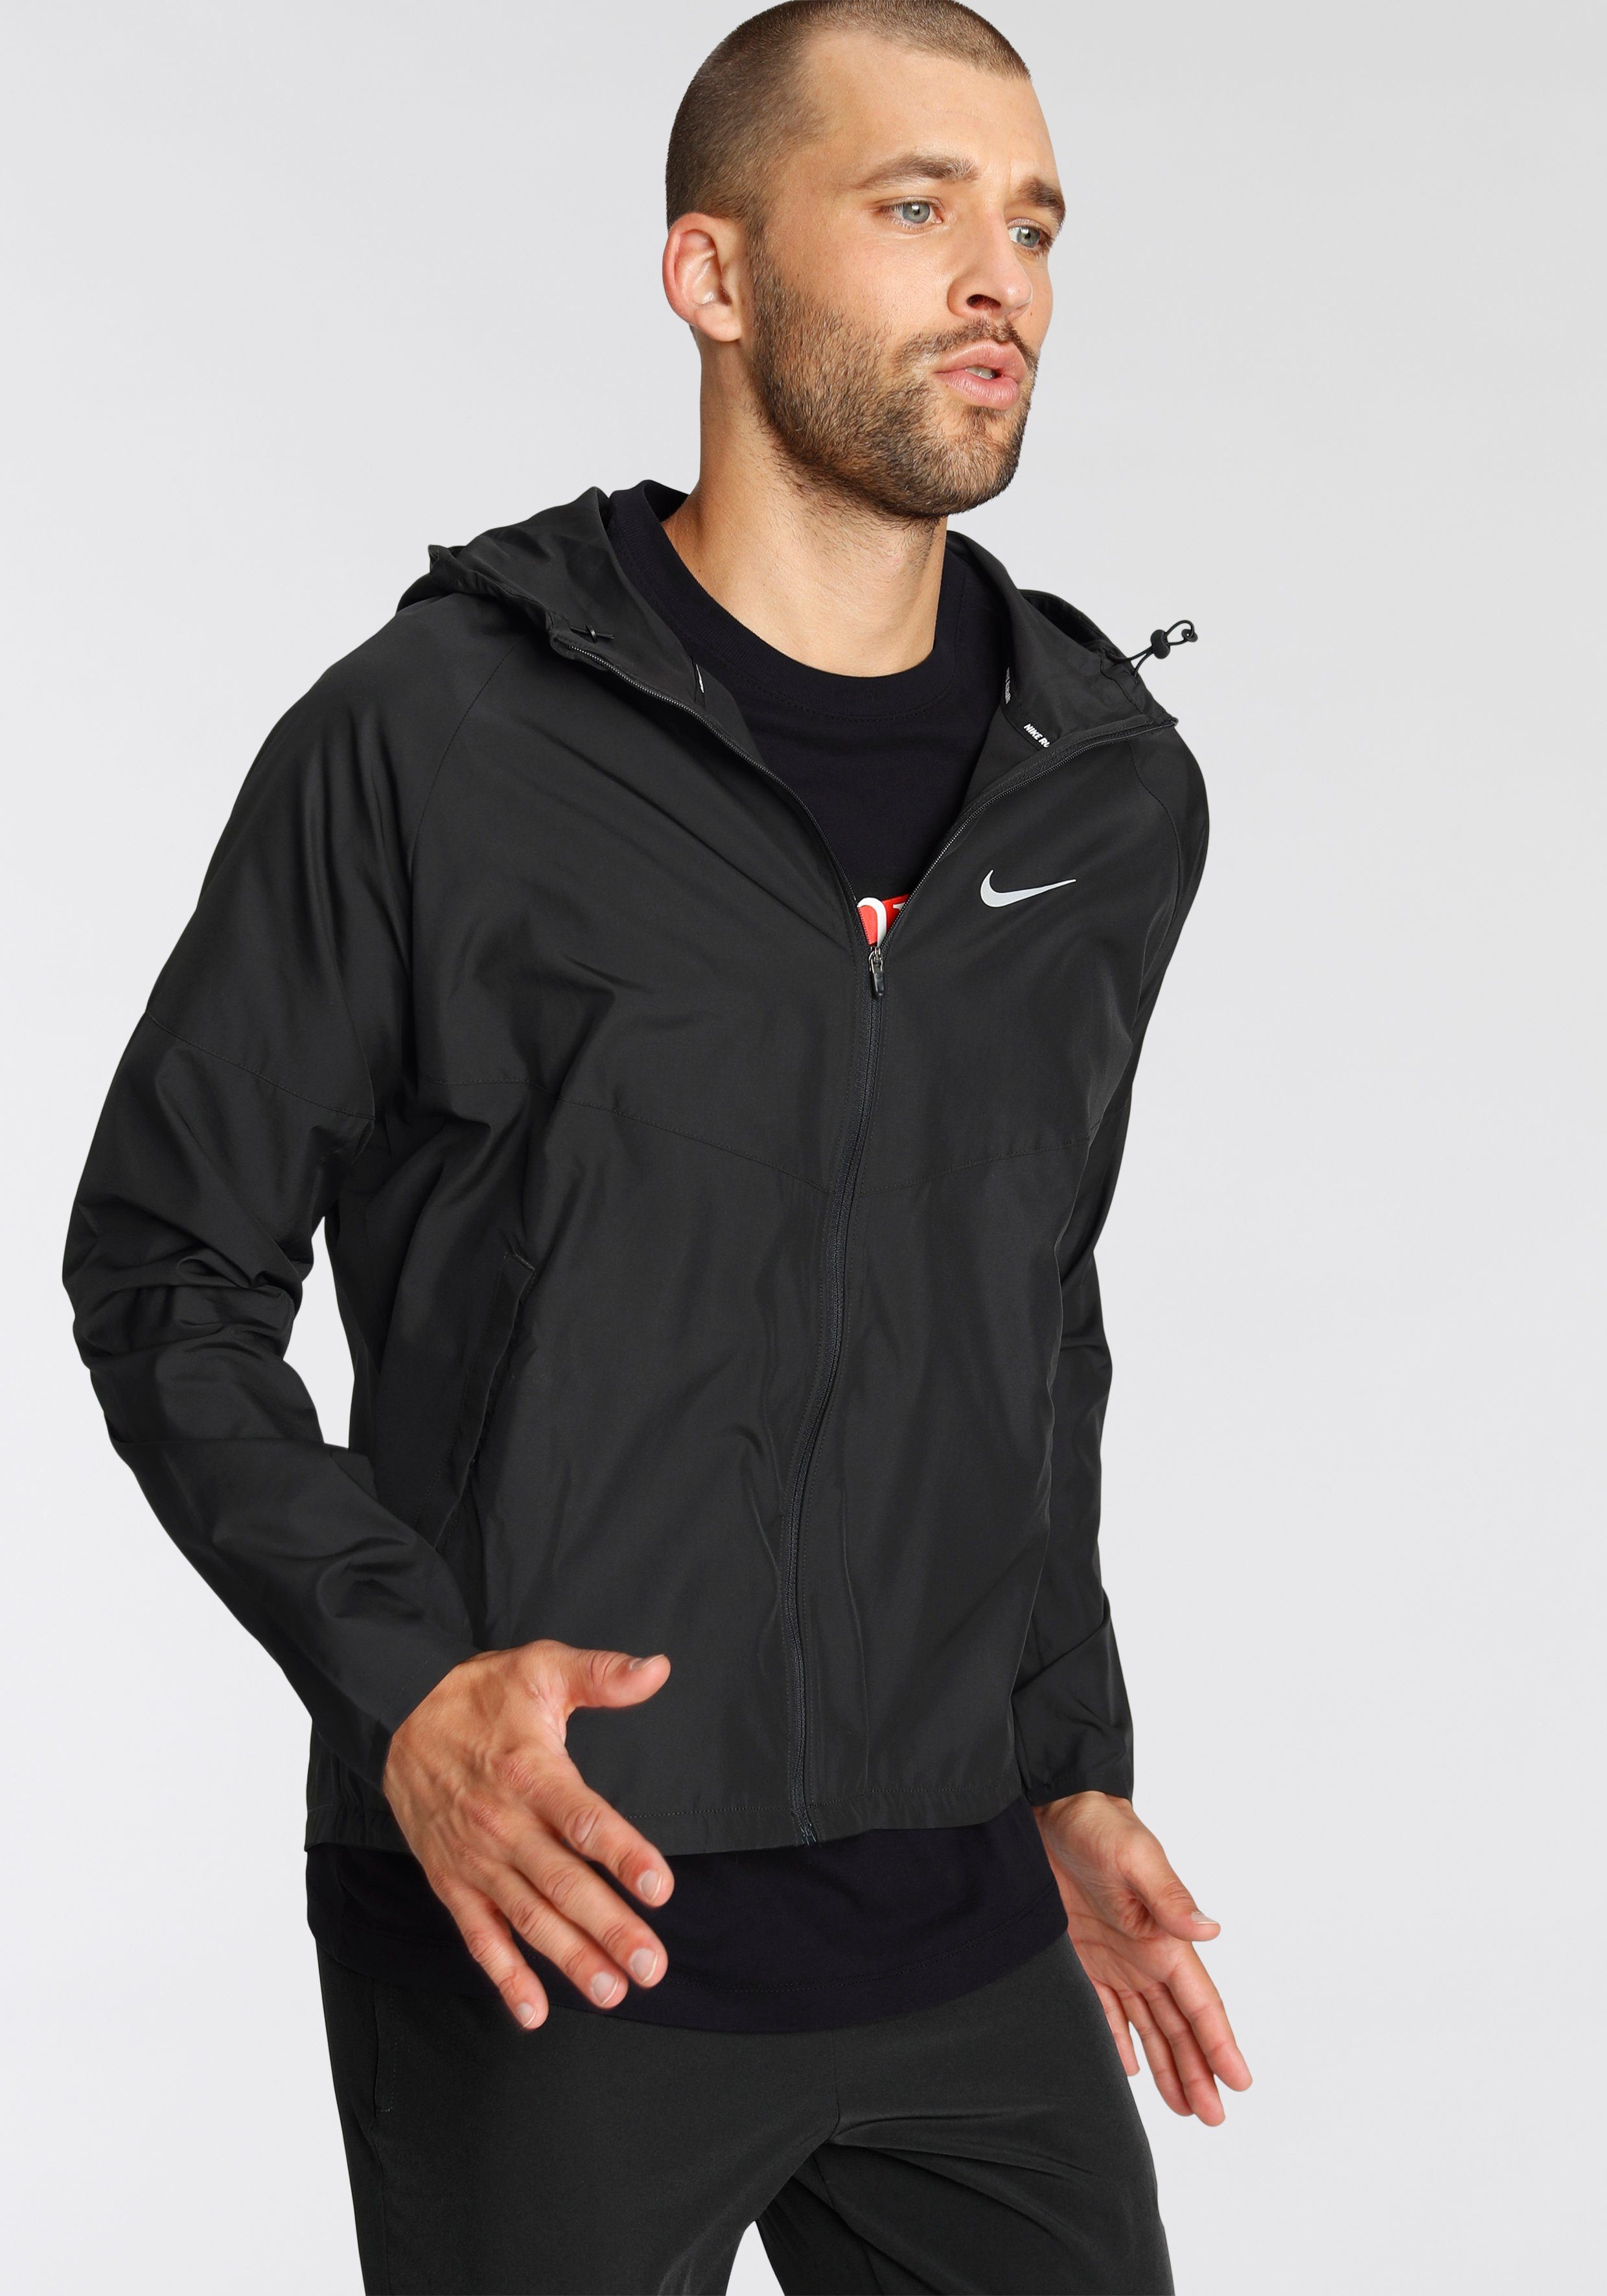 Men's Laufjacke Running Jacket schwarz Miler Repel Nike